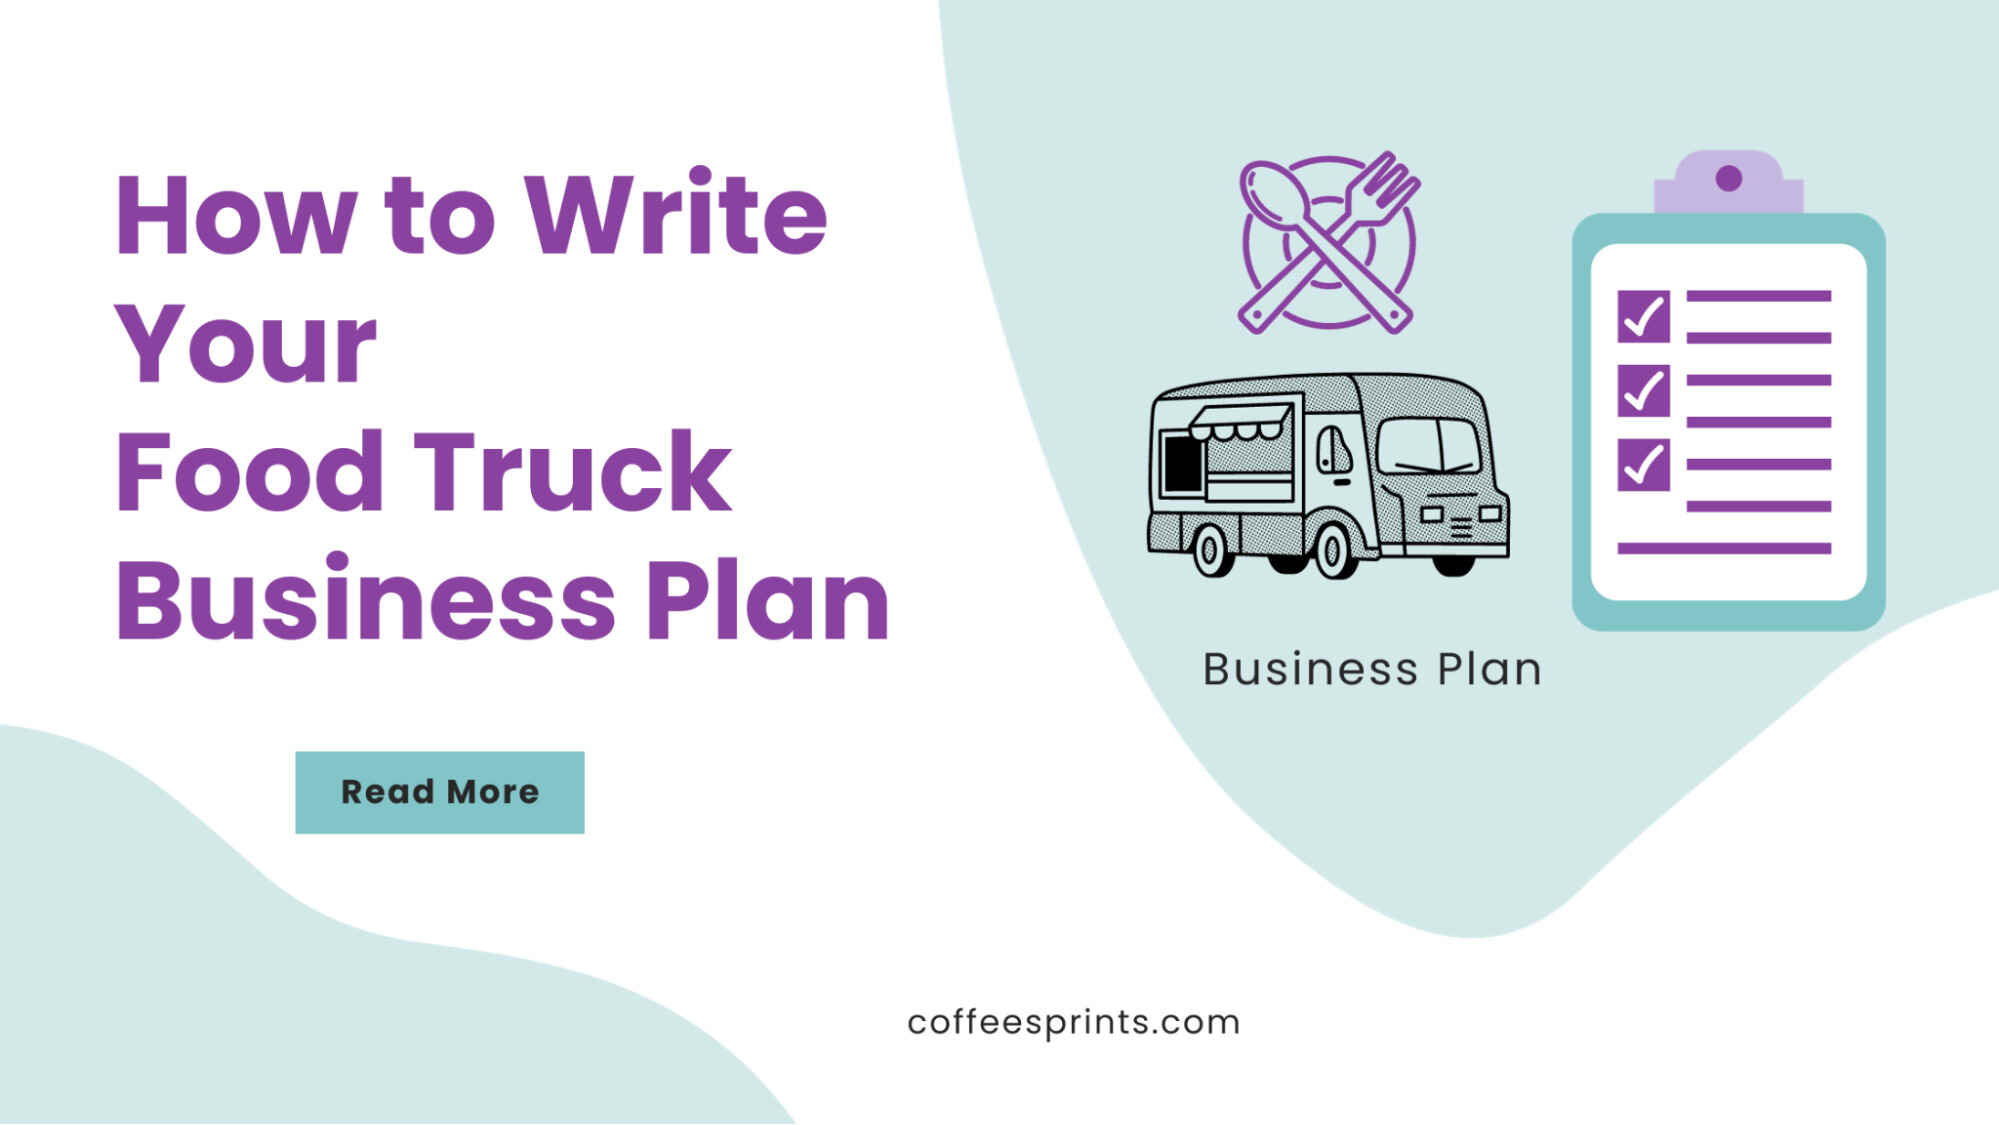 business plan to start food truck business